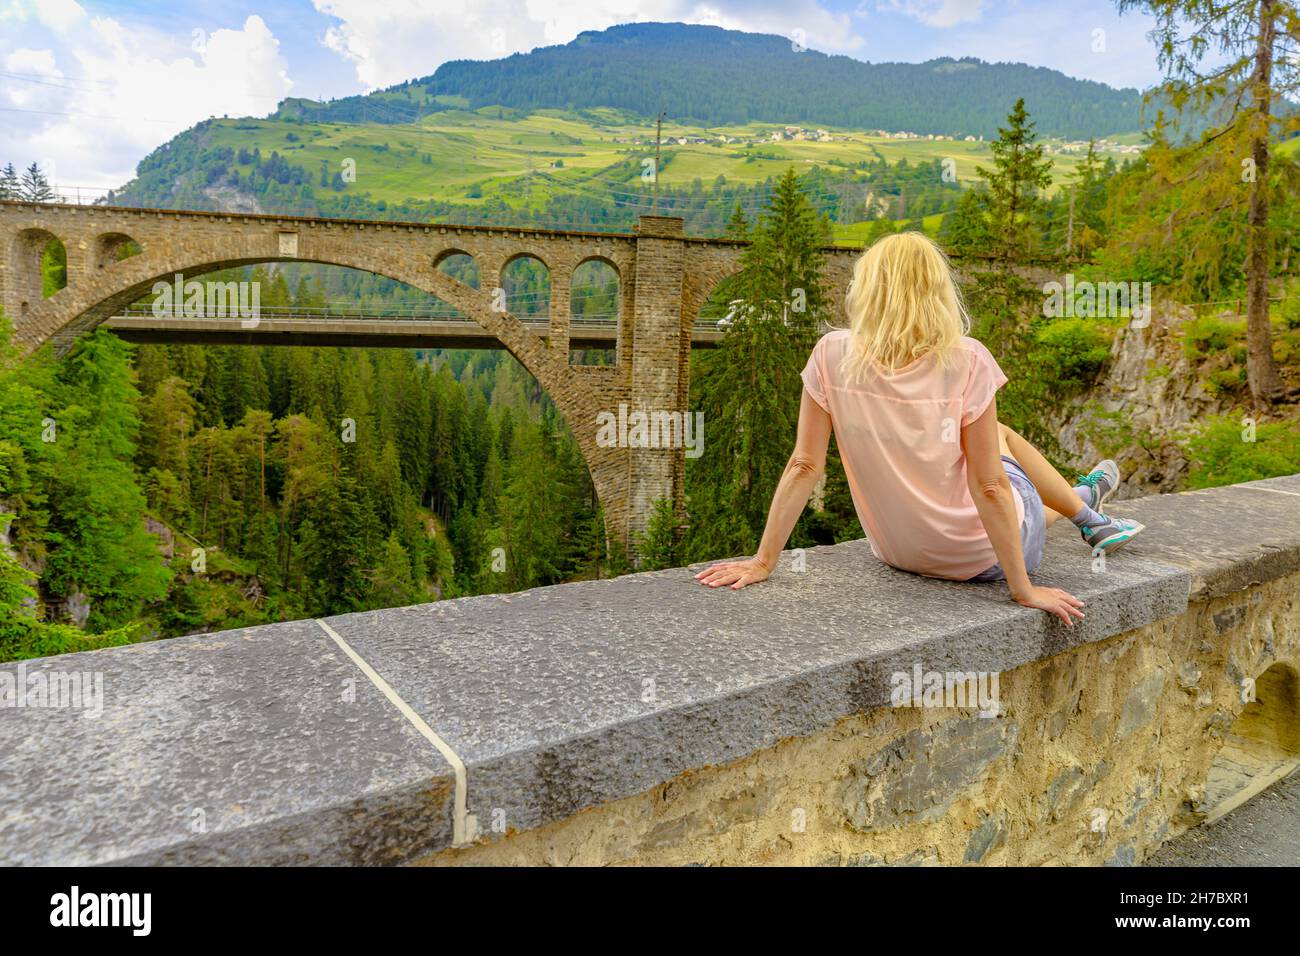 Woman at Solis Viaduct bridge of Swiss railway in Switzerland. Swiss train Bernina and World Heritage in mounts of Grisons canton. Albula Railway by Stock Photo